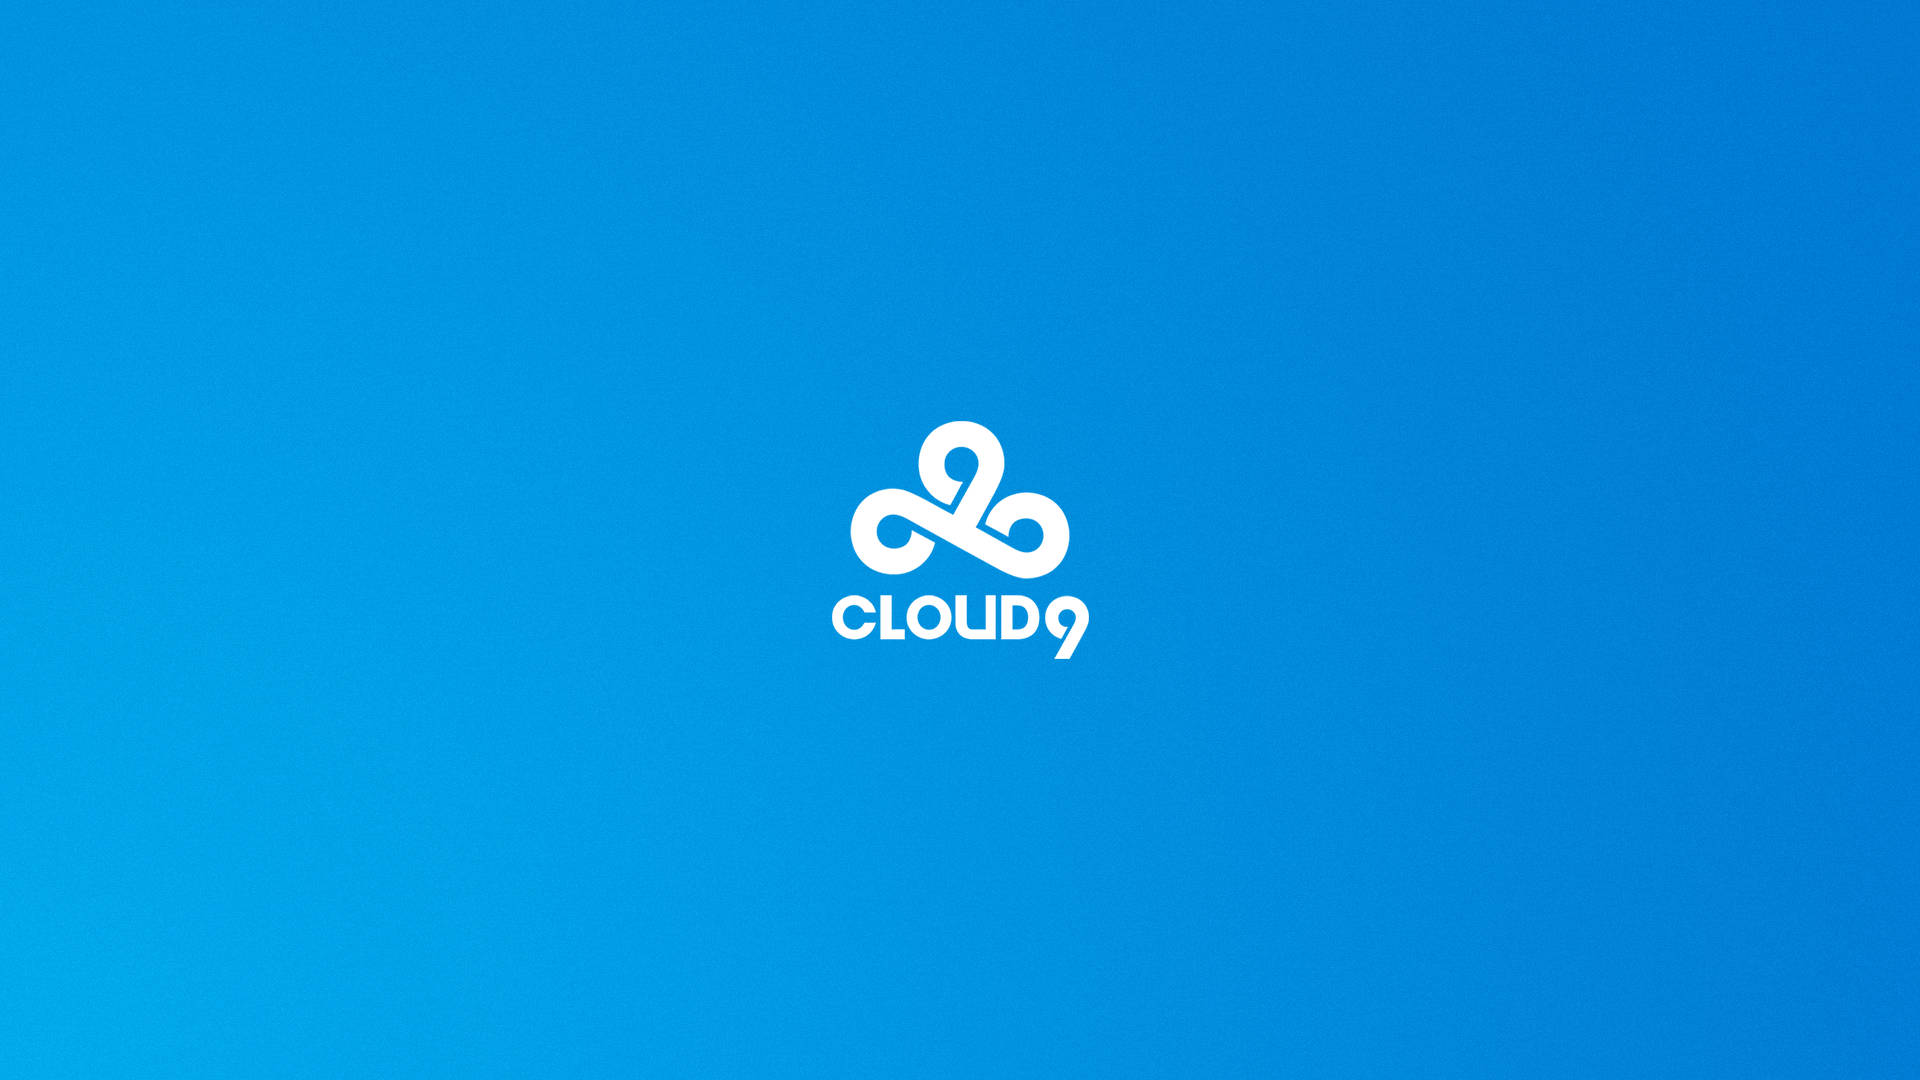 Cloud9 Minimalistic Logo In White Wallpaper